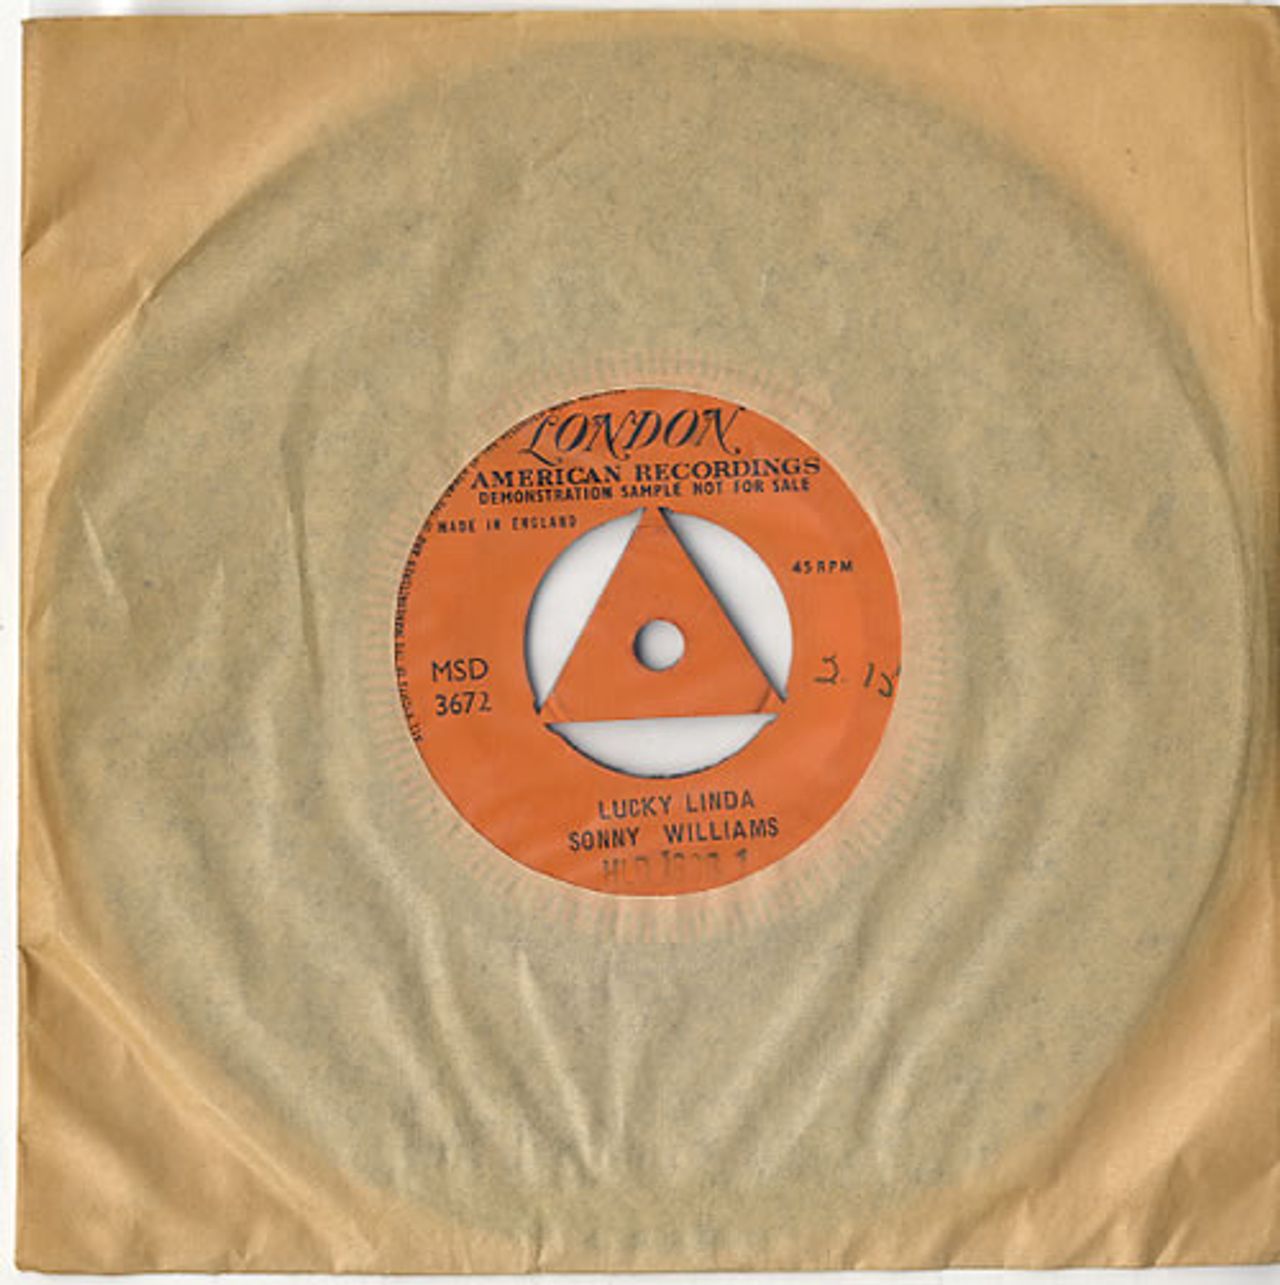 Sonny Williams Lucky Linda - Demo UK Promo 7 vinyl — RareVinyl.com